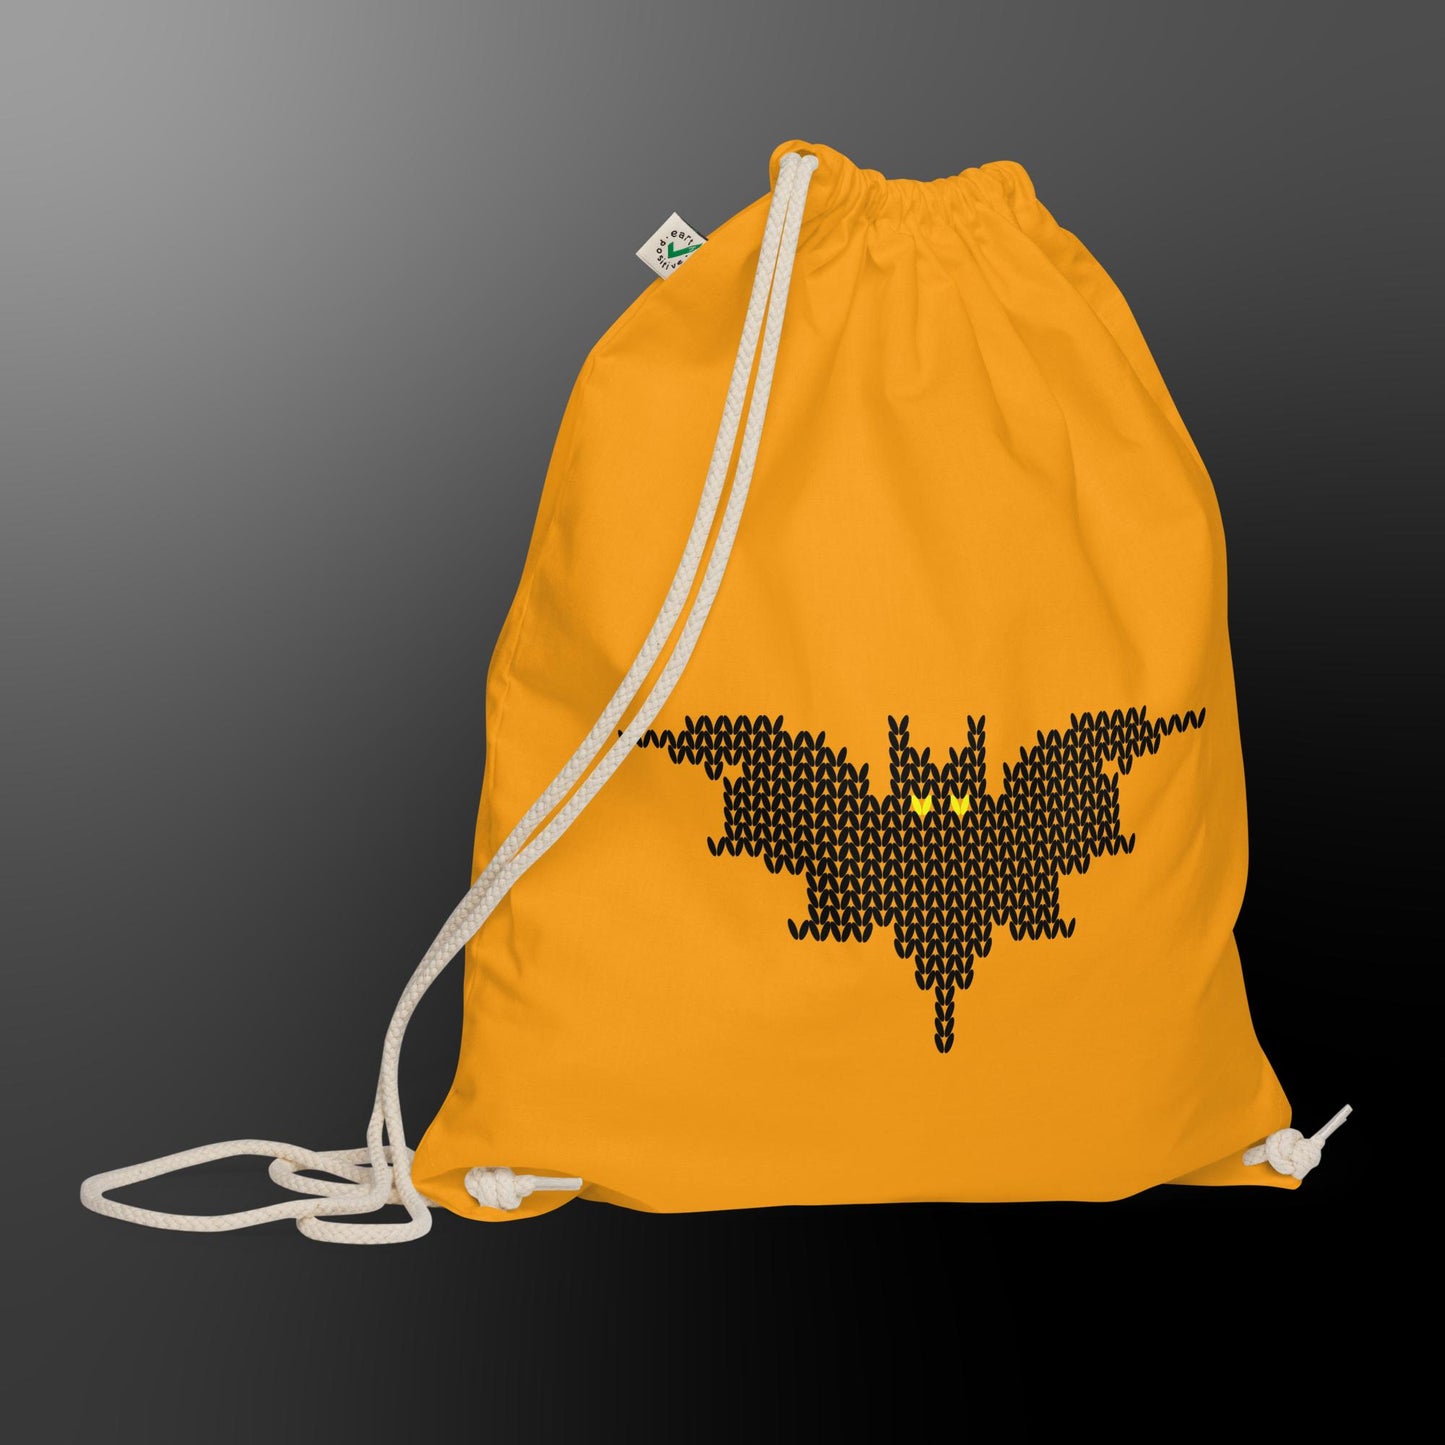 Halloween sports bag with bat